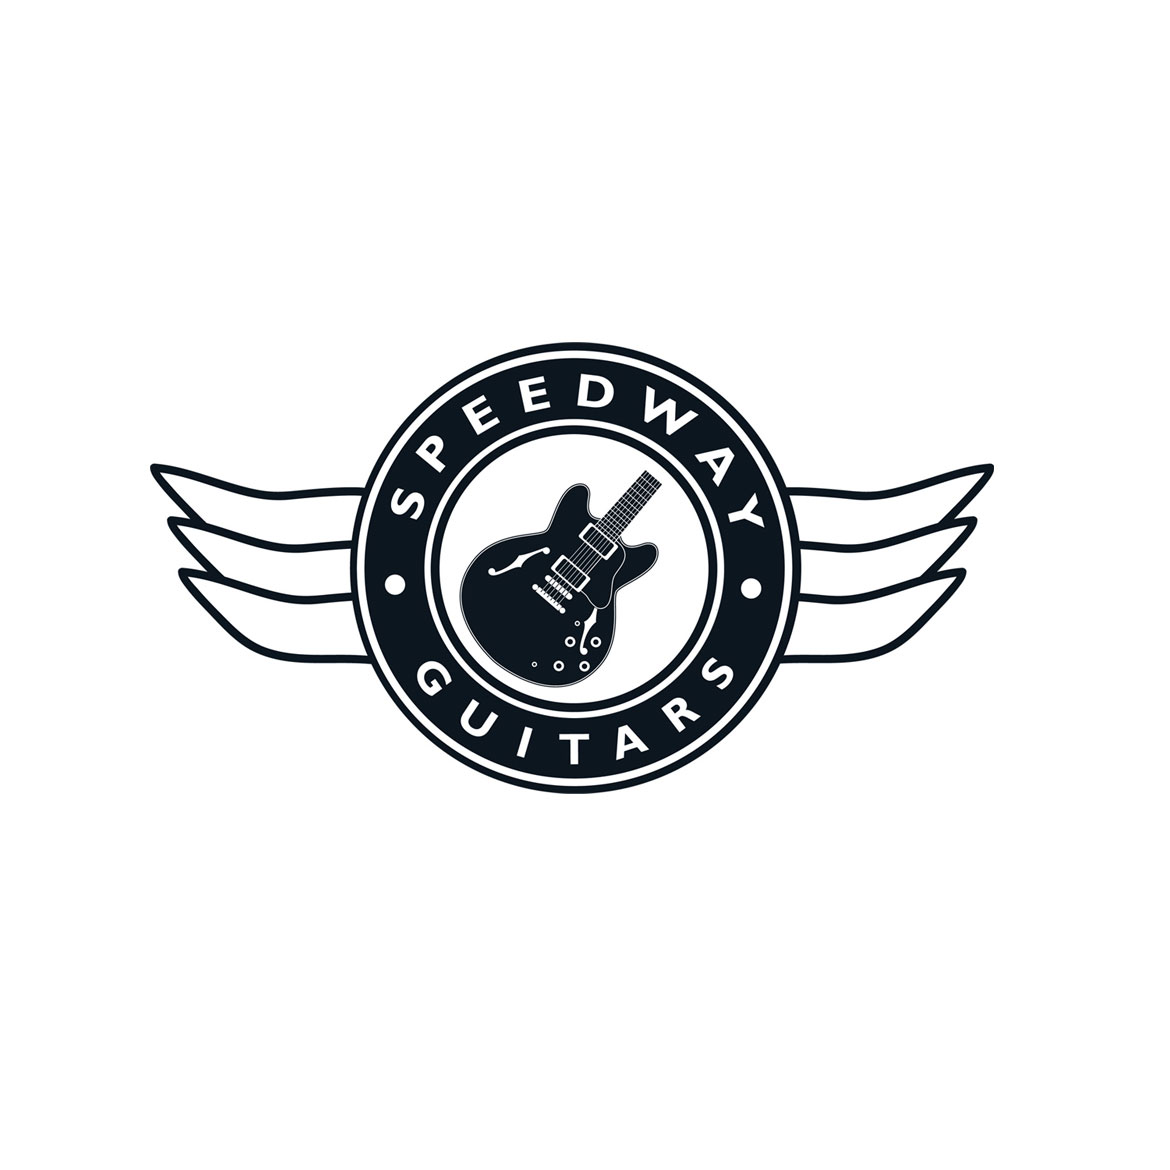 Guitar shop logo